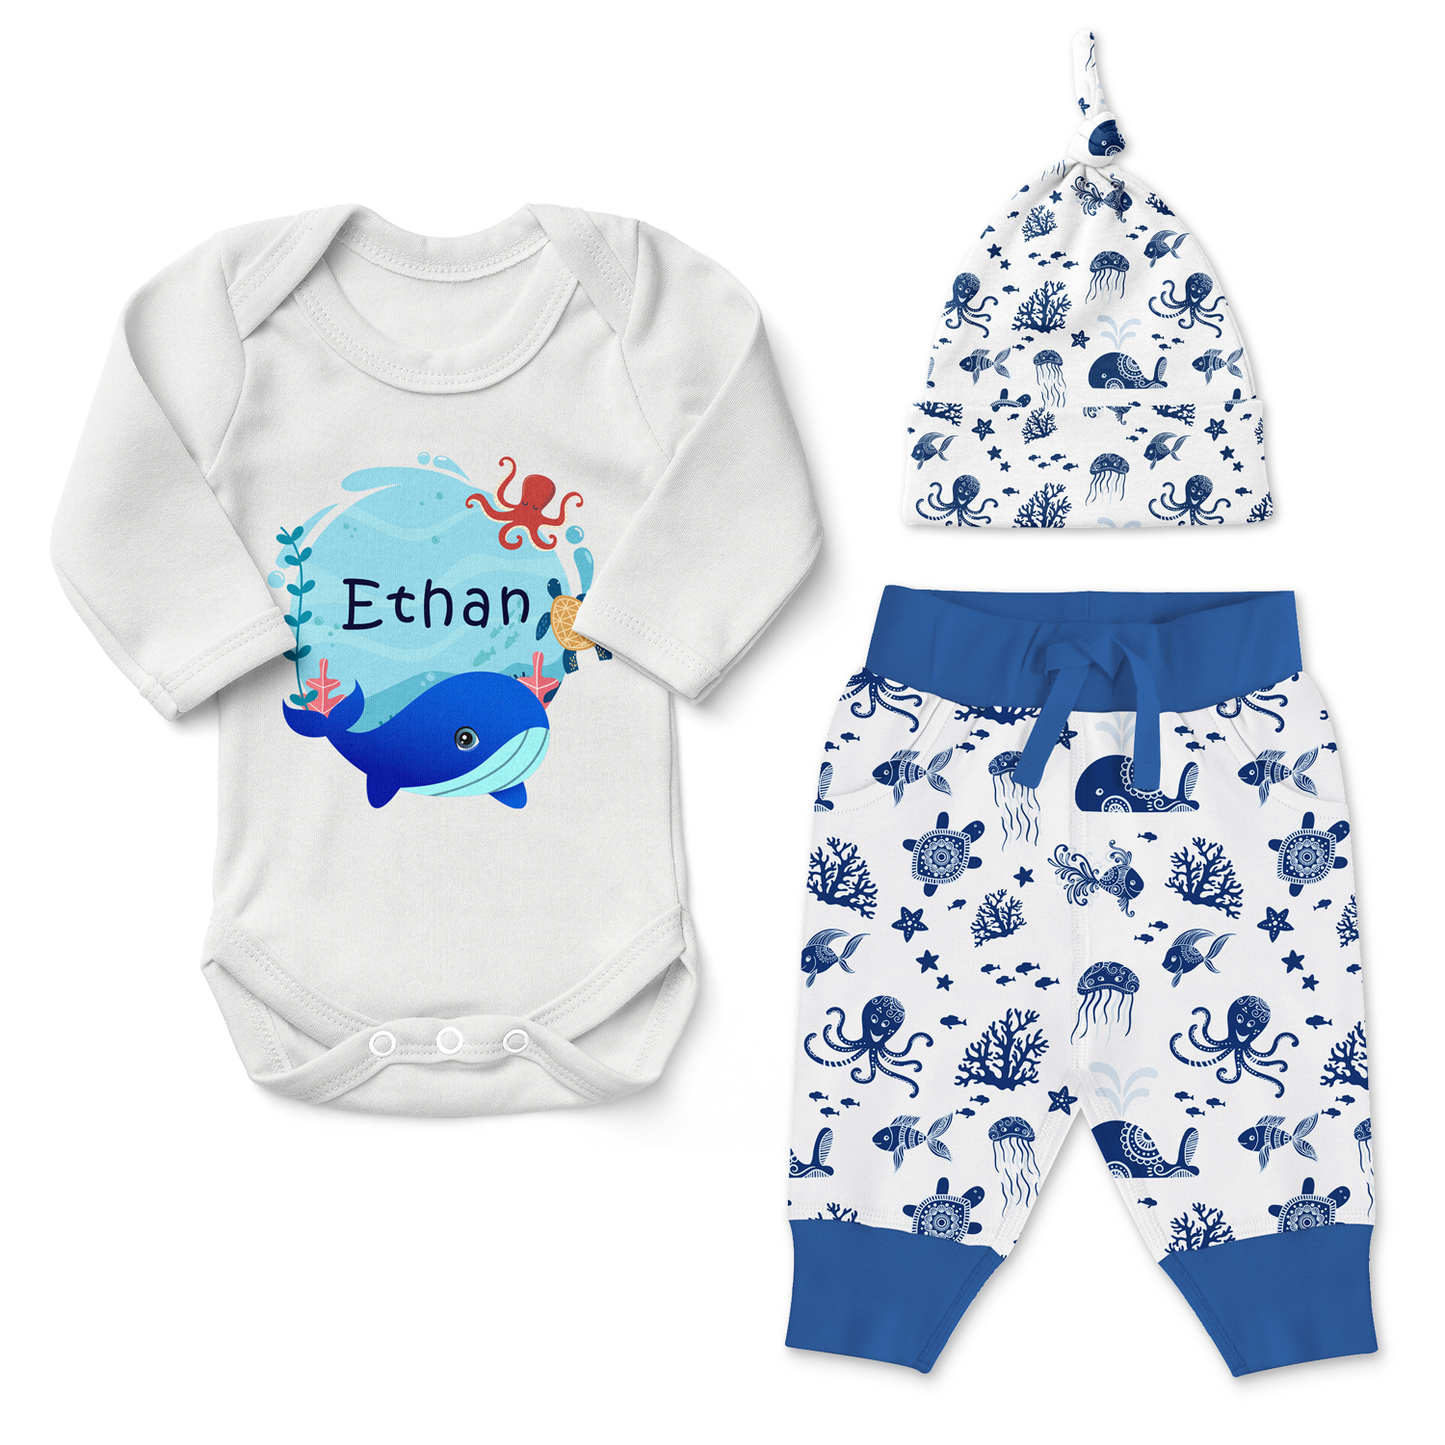 Zeronto Baby Boy Clothing Gift Box - Little Ocean's Friends